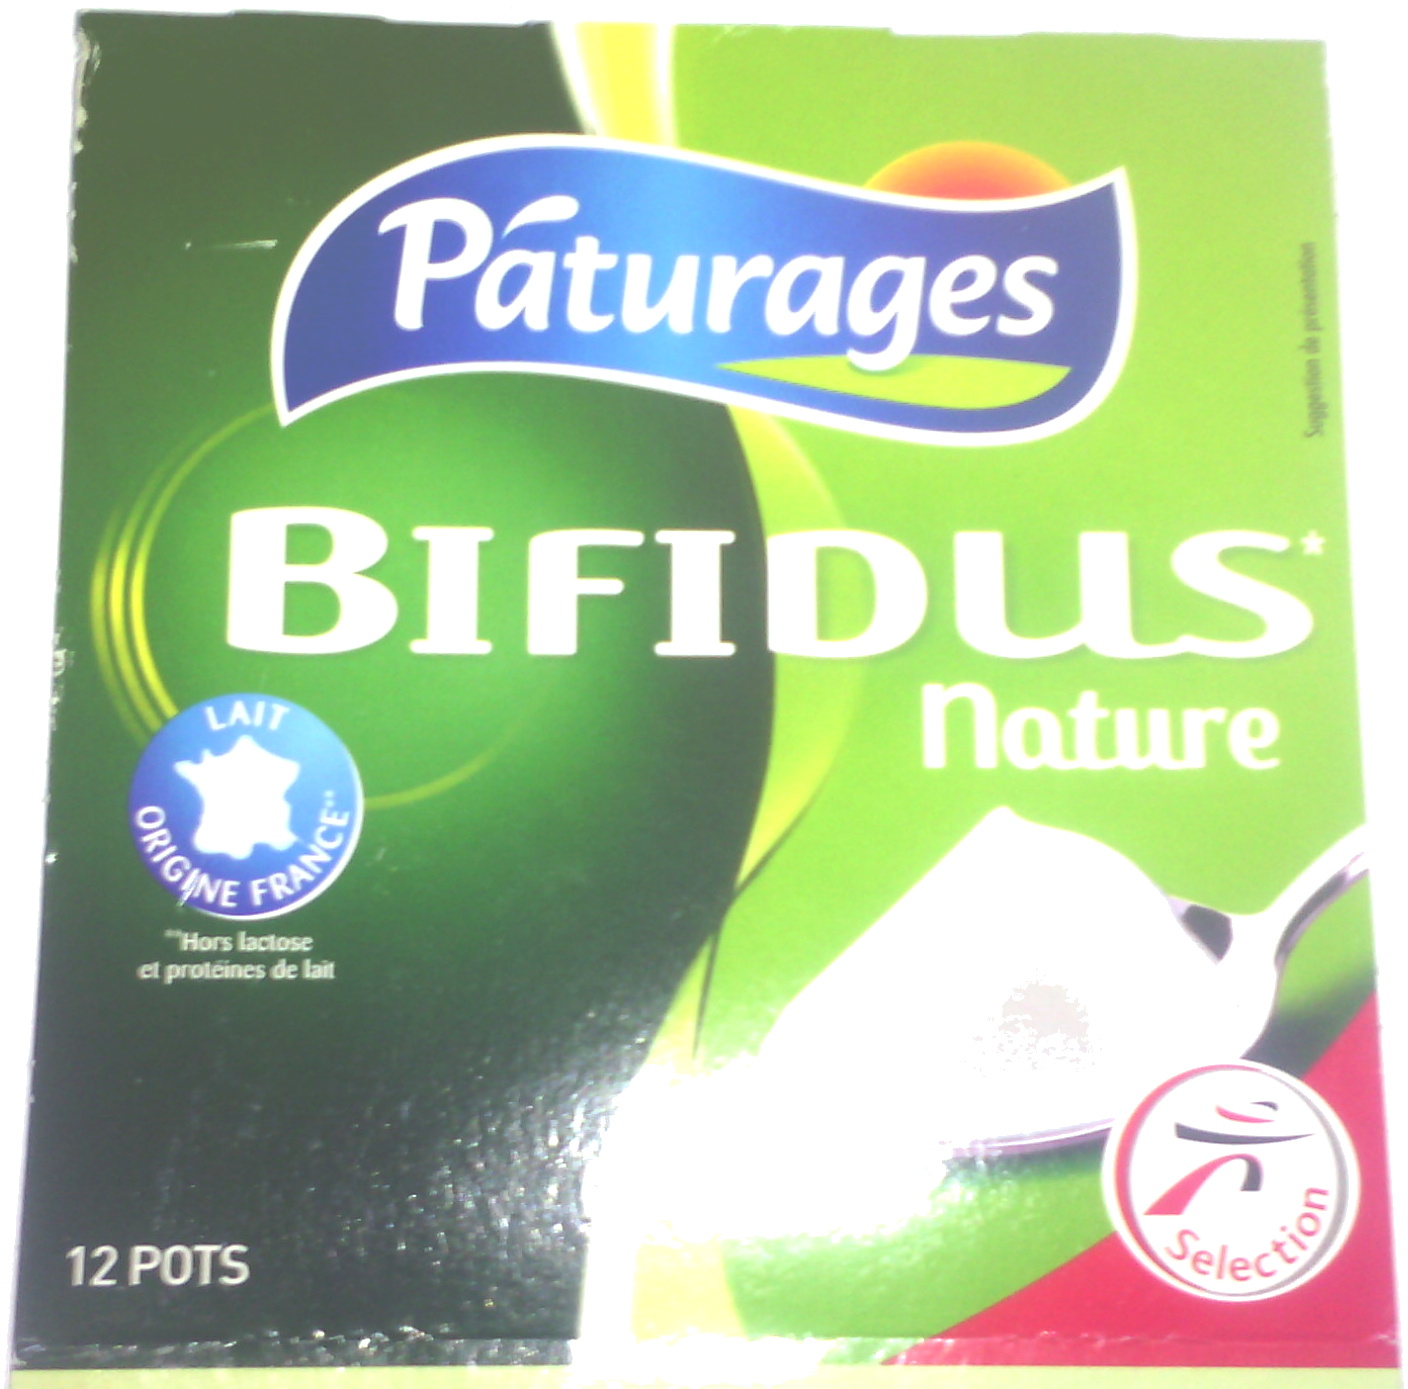 Bifidus nature (12 Pots) - Produit